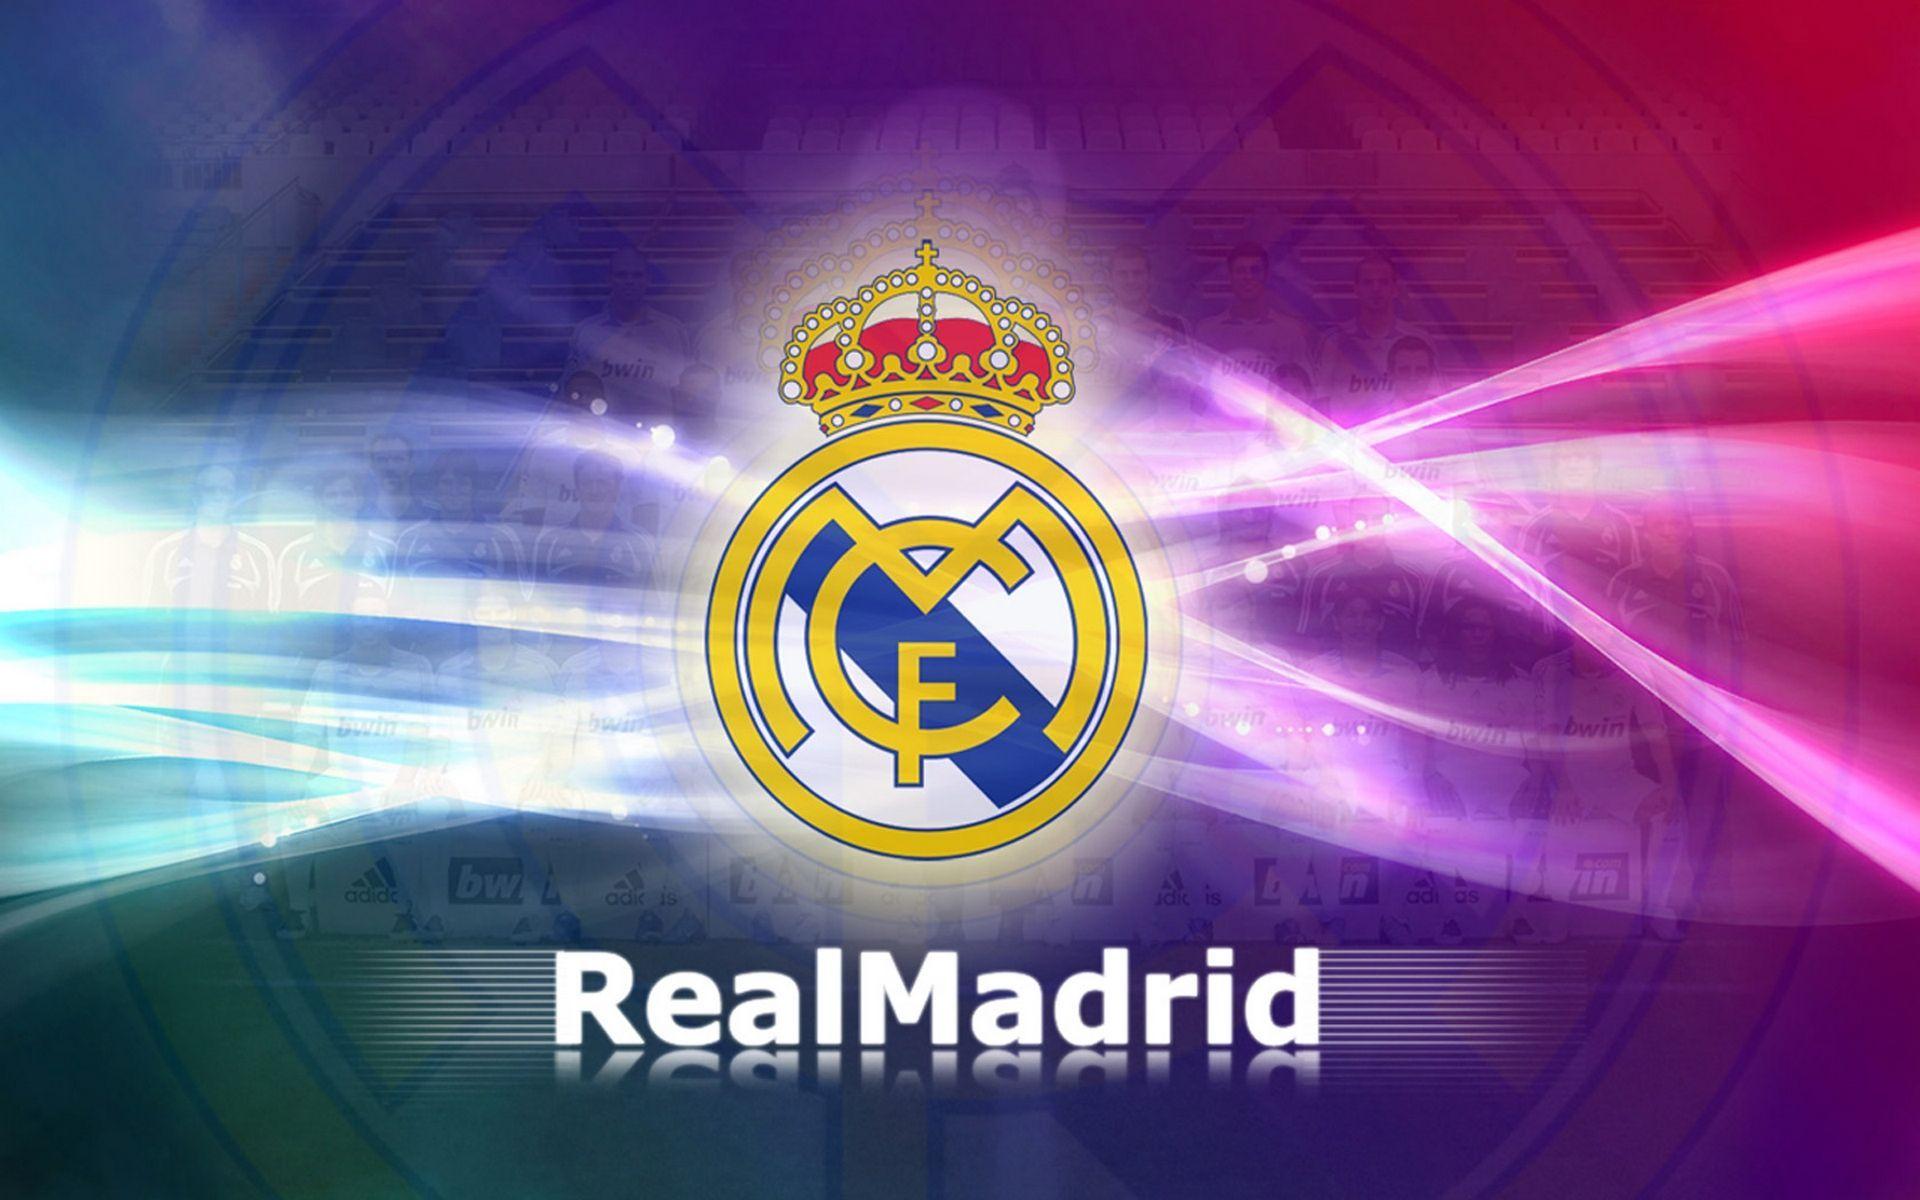 Real Madrid Uefa Champions League. Escudo del real madrid